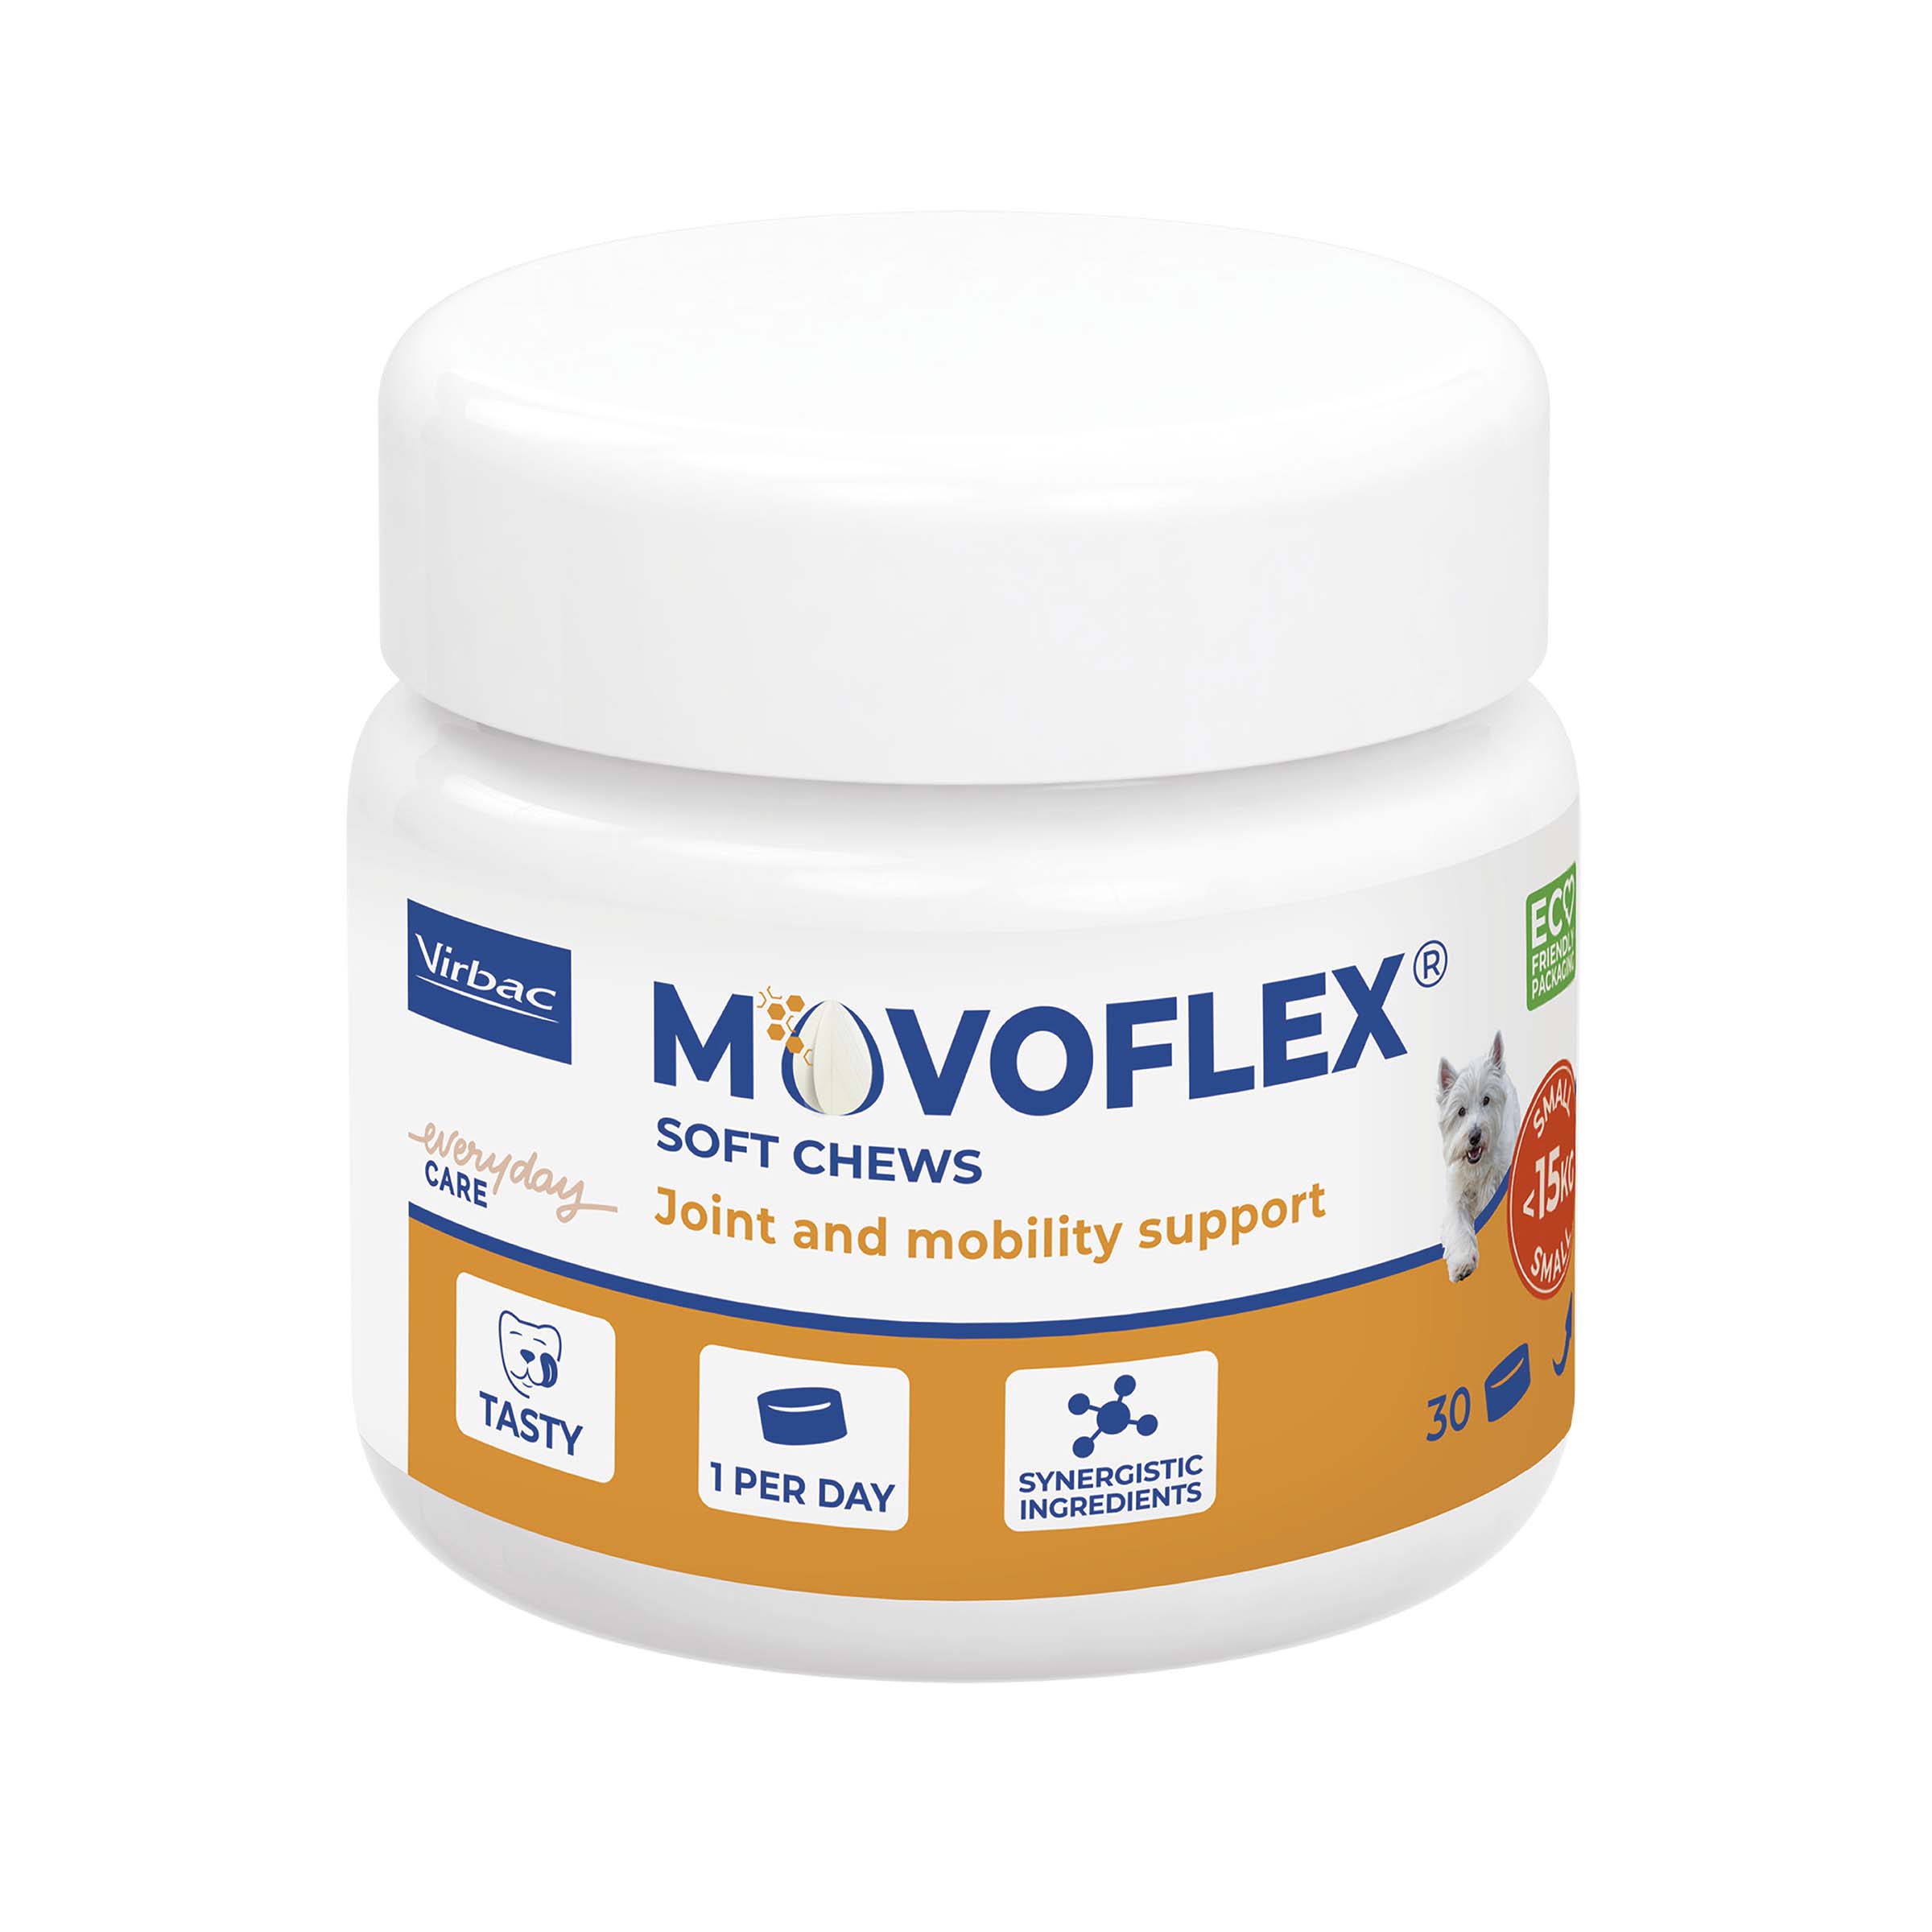 Virbac Movoflex Soft Chews, S, 30 stk.